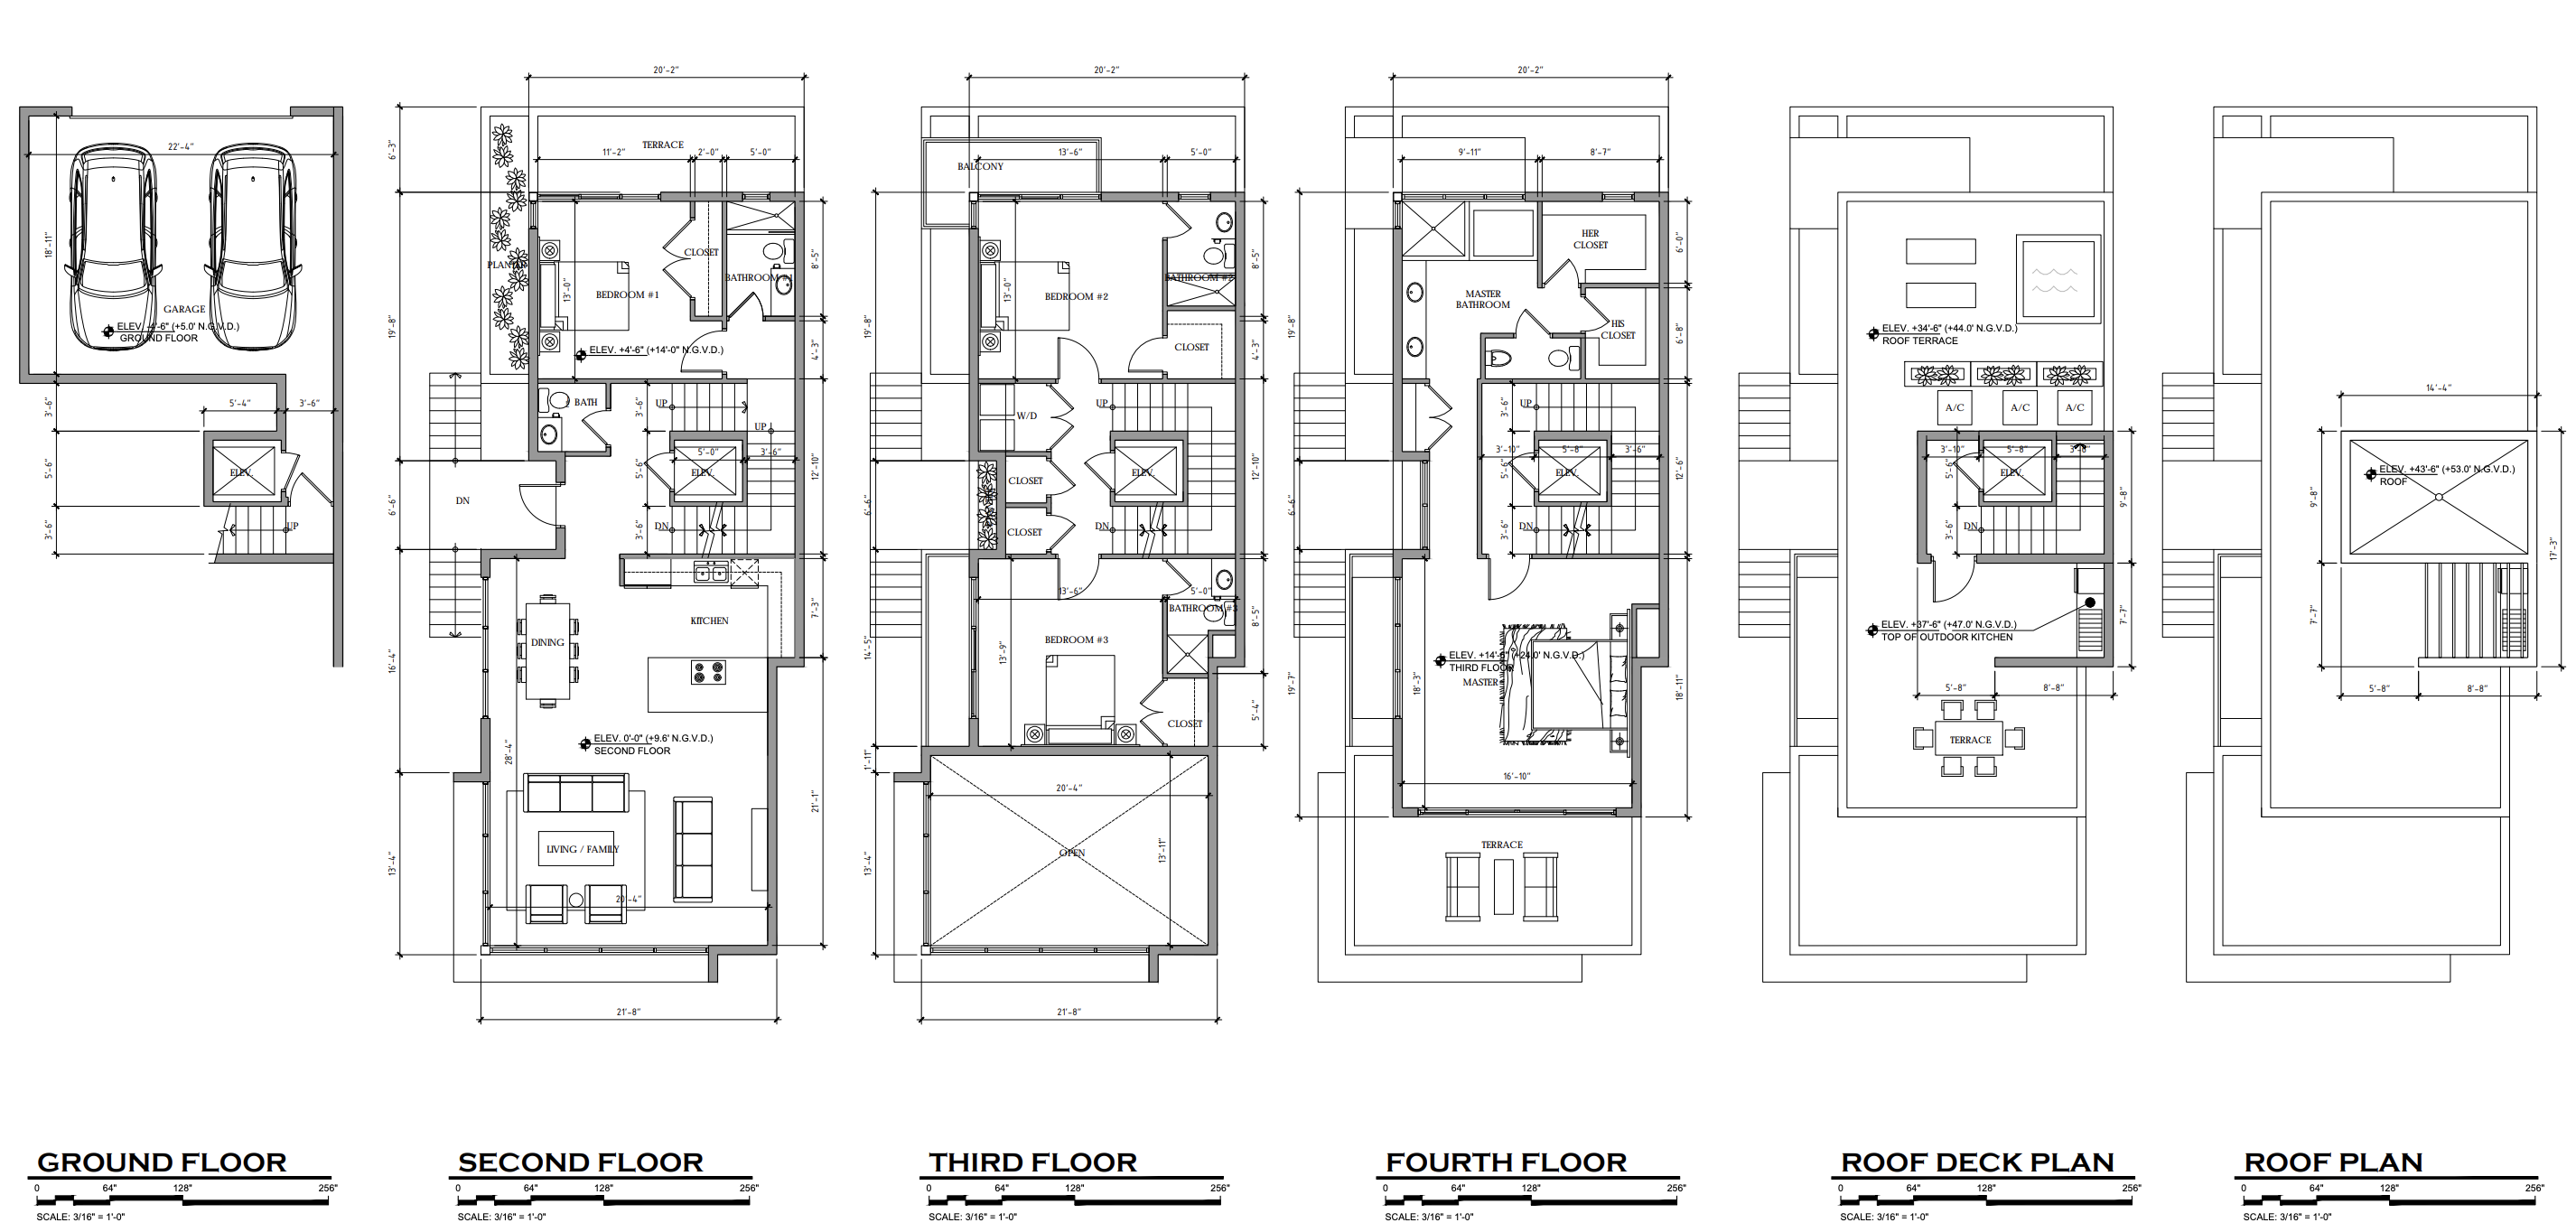 Unit C Floor Plan. Courtesy of DNB Design Group.